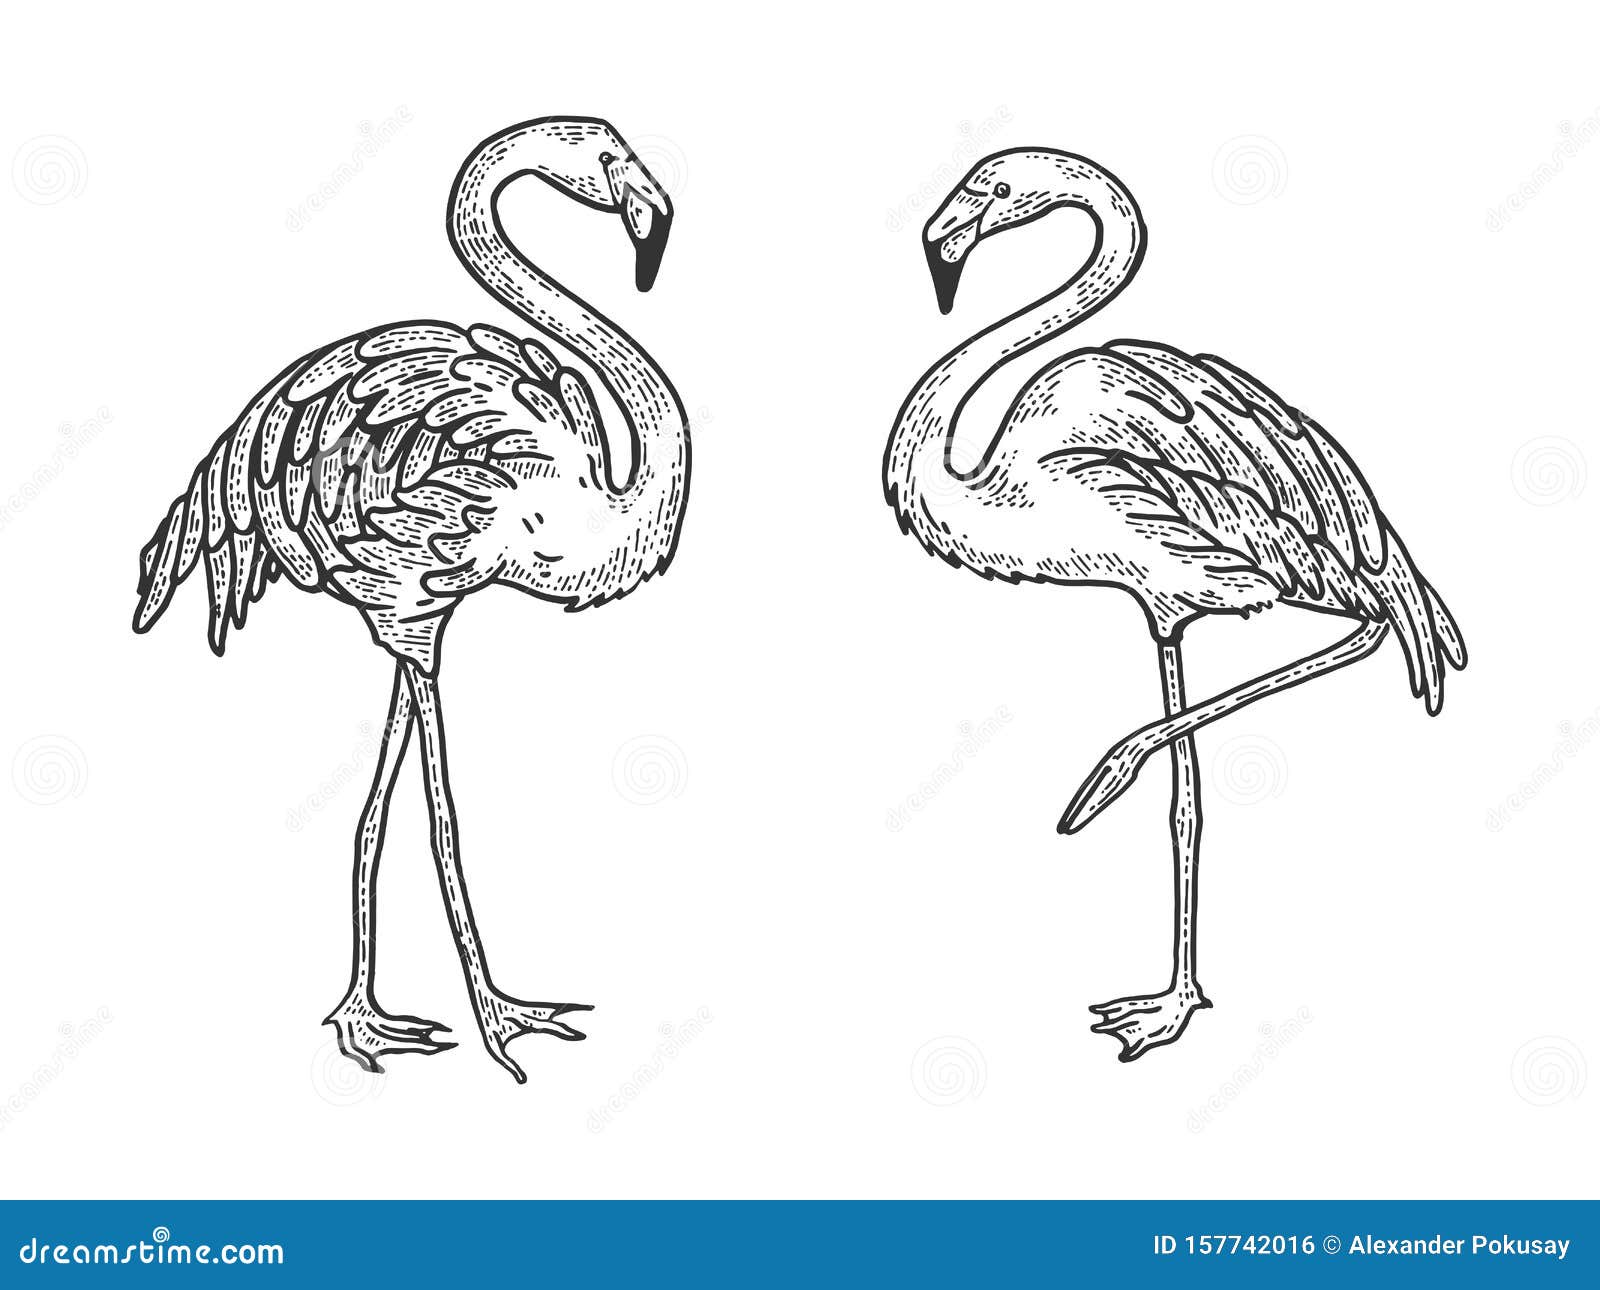 Premium Vector  Flamingo tropical bird sketch hand drawn illustration  realistic vintage black line style ink art